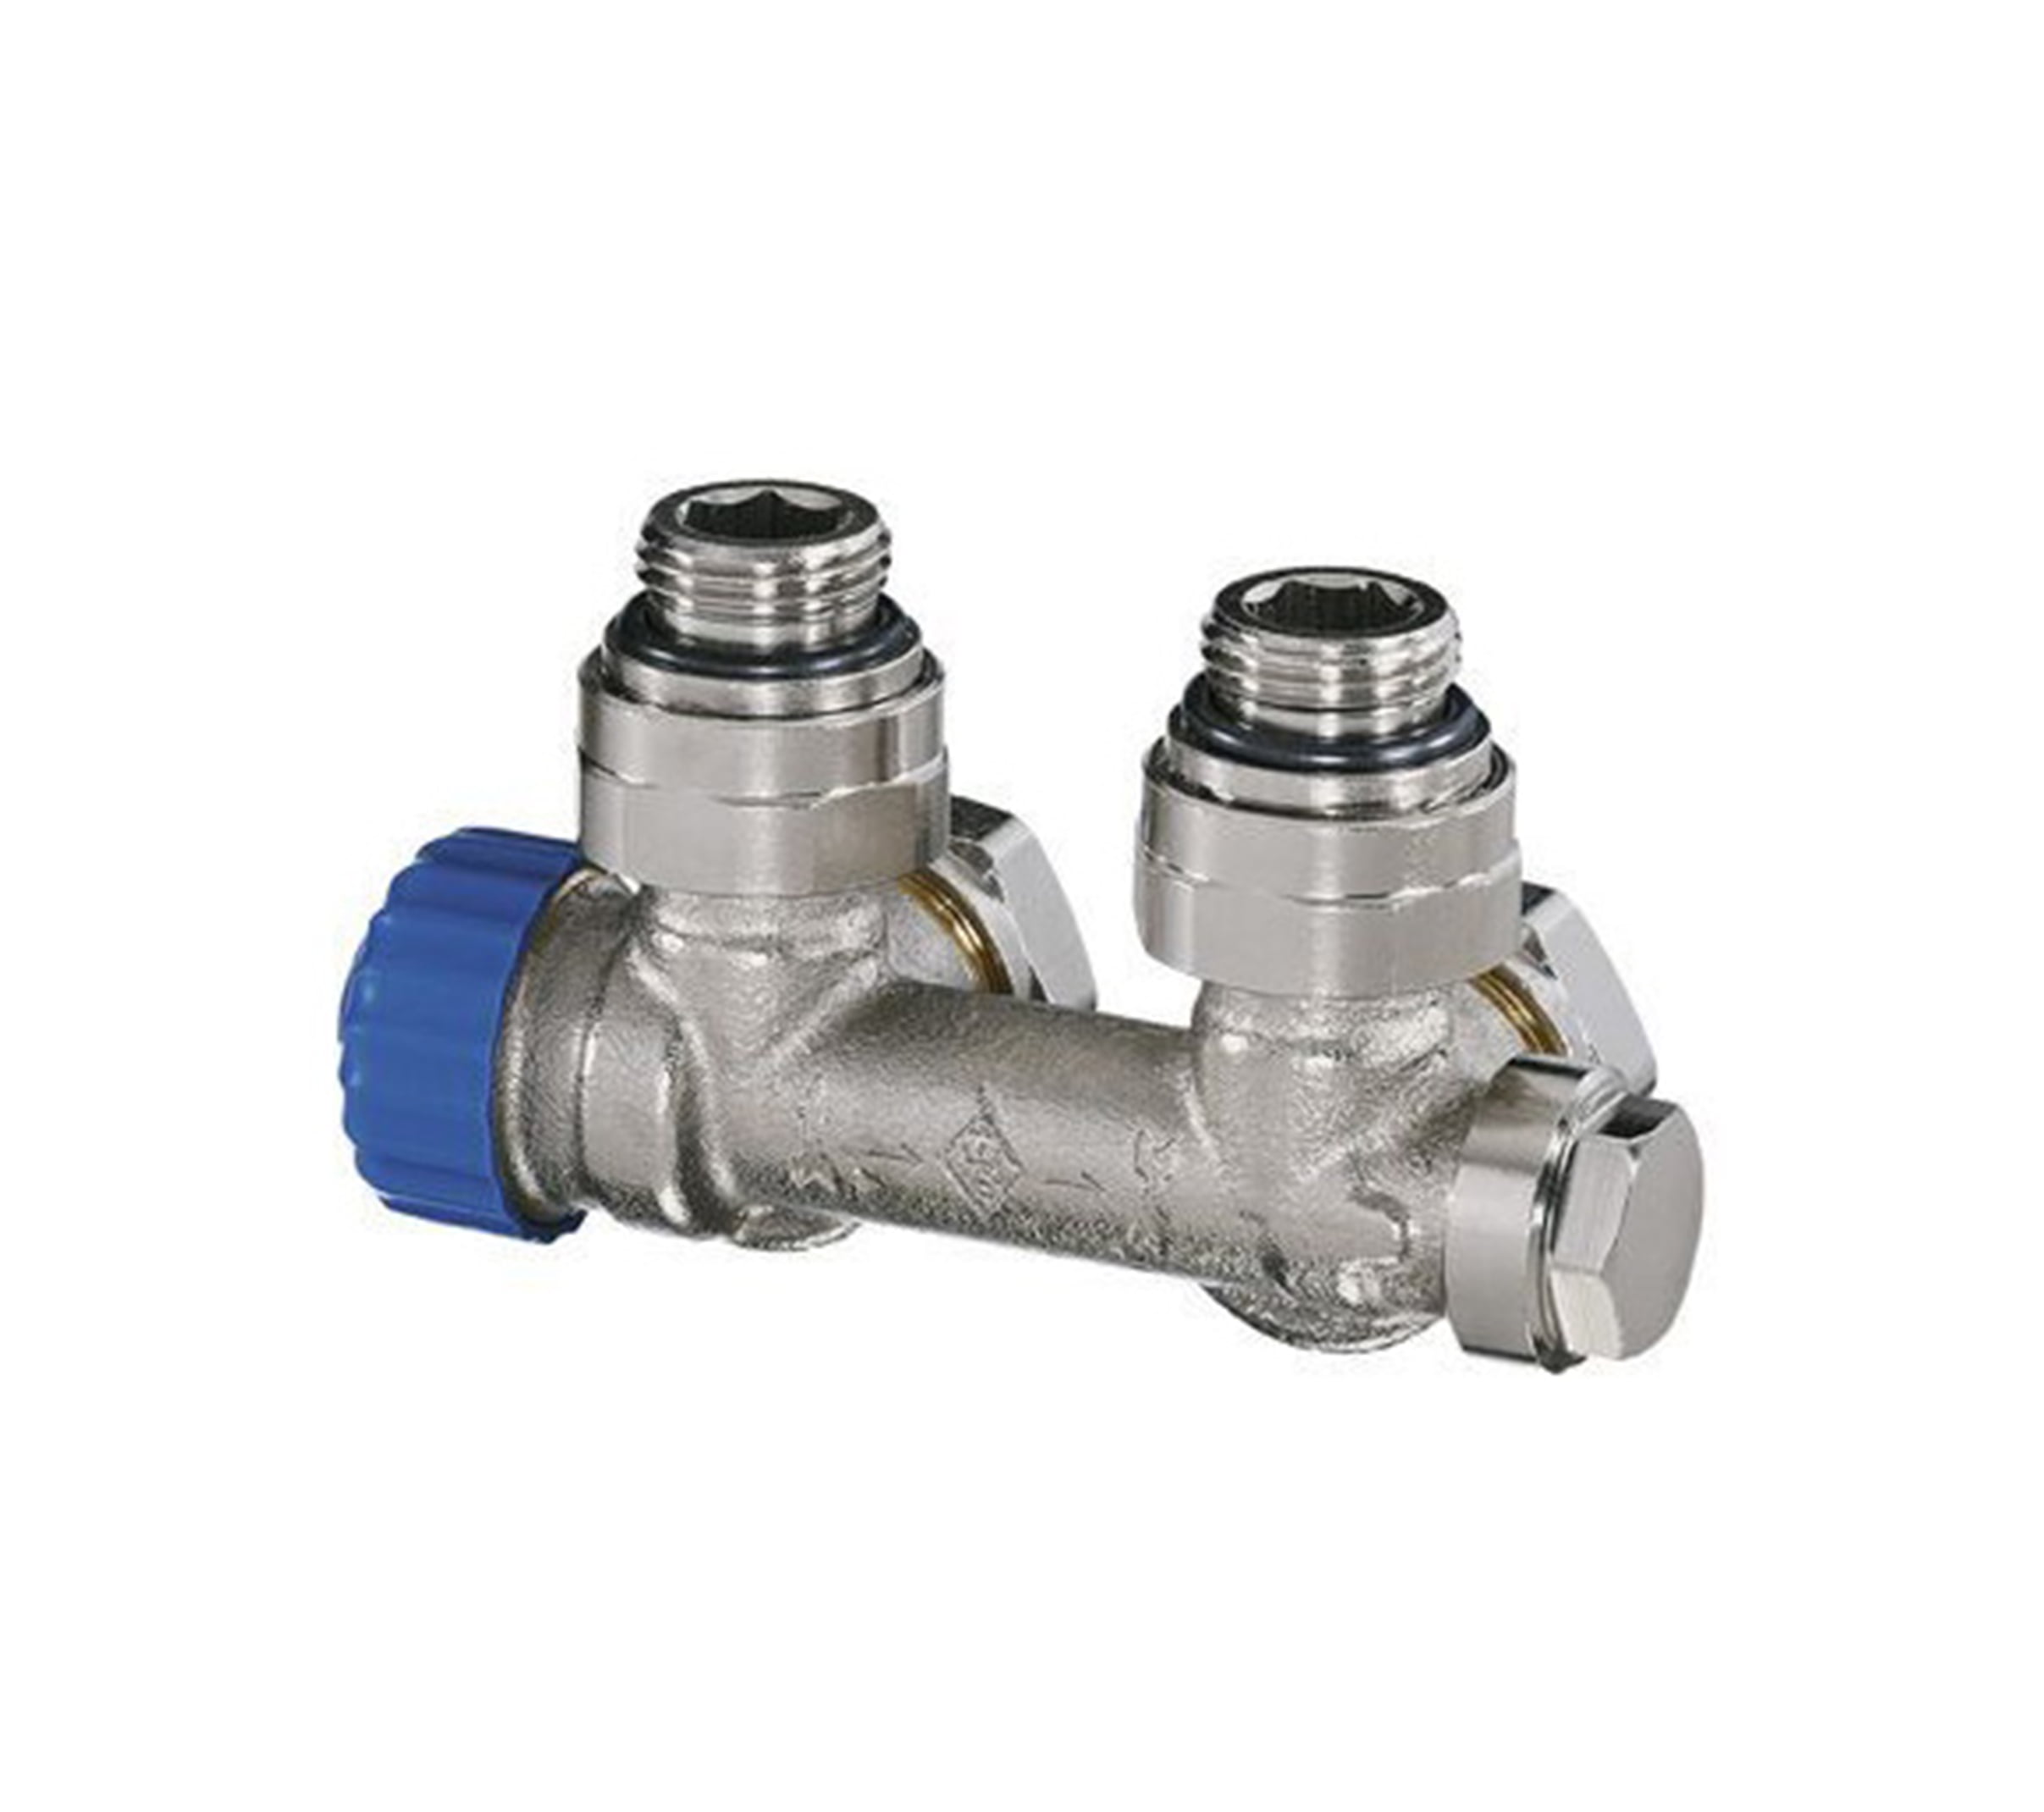 heimeier-multilux-thermostatic-valve-rp-1-2-angle-female-thread-single-pipe-system--heim-3855-02-000_0